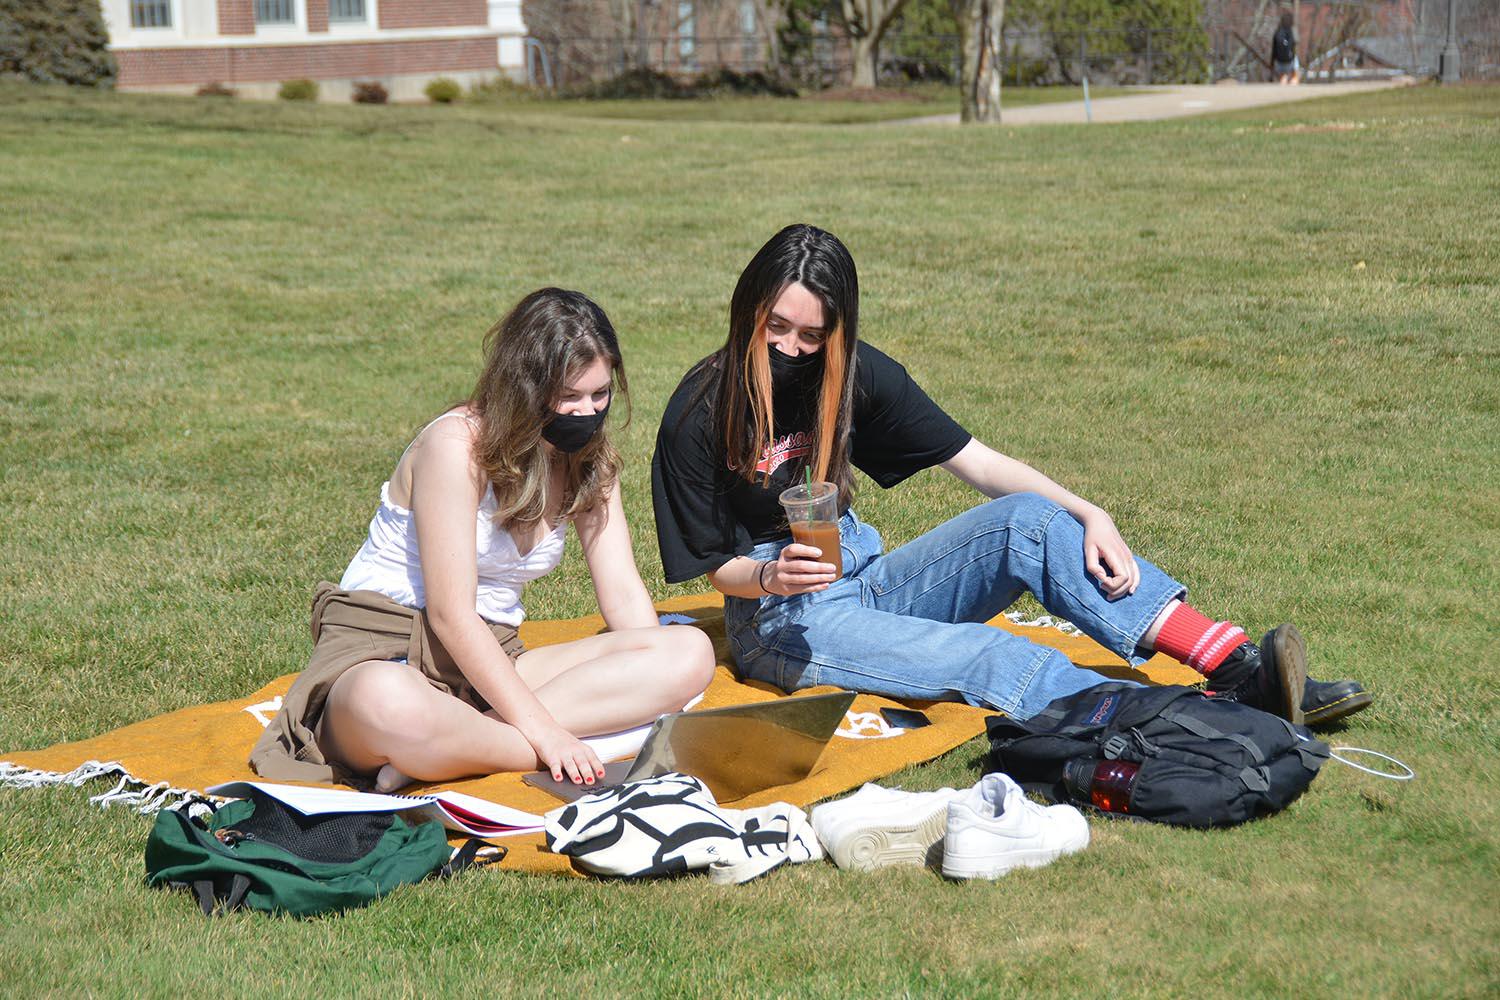 Wesleyan University students enjoy spring break safely on Middletown campus